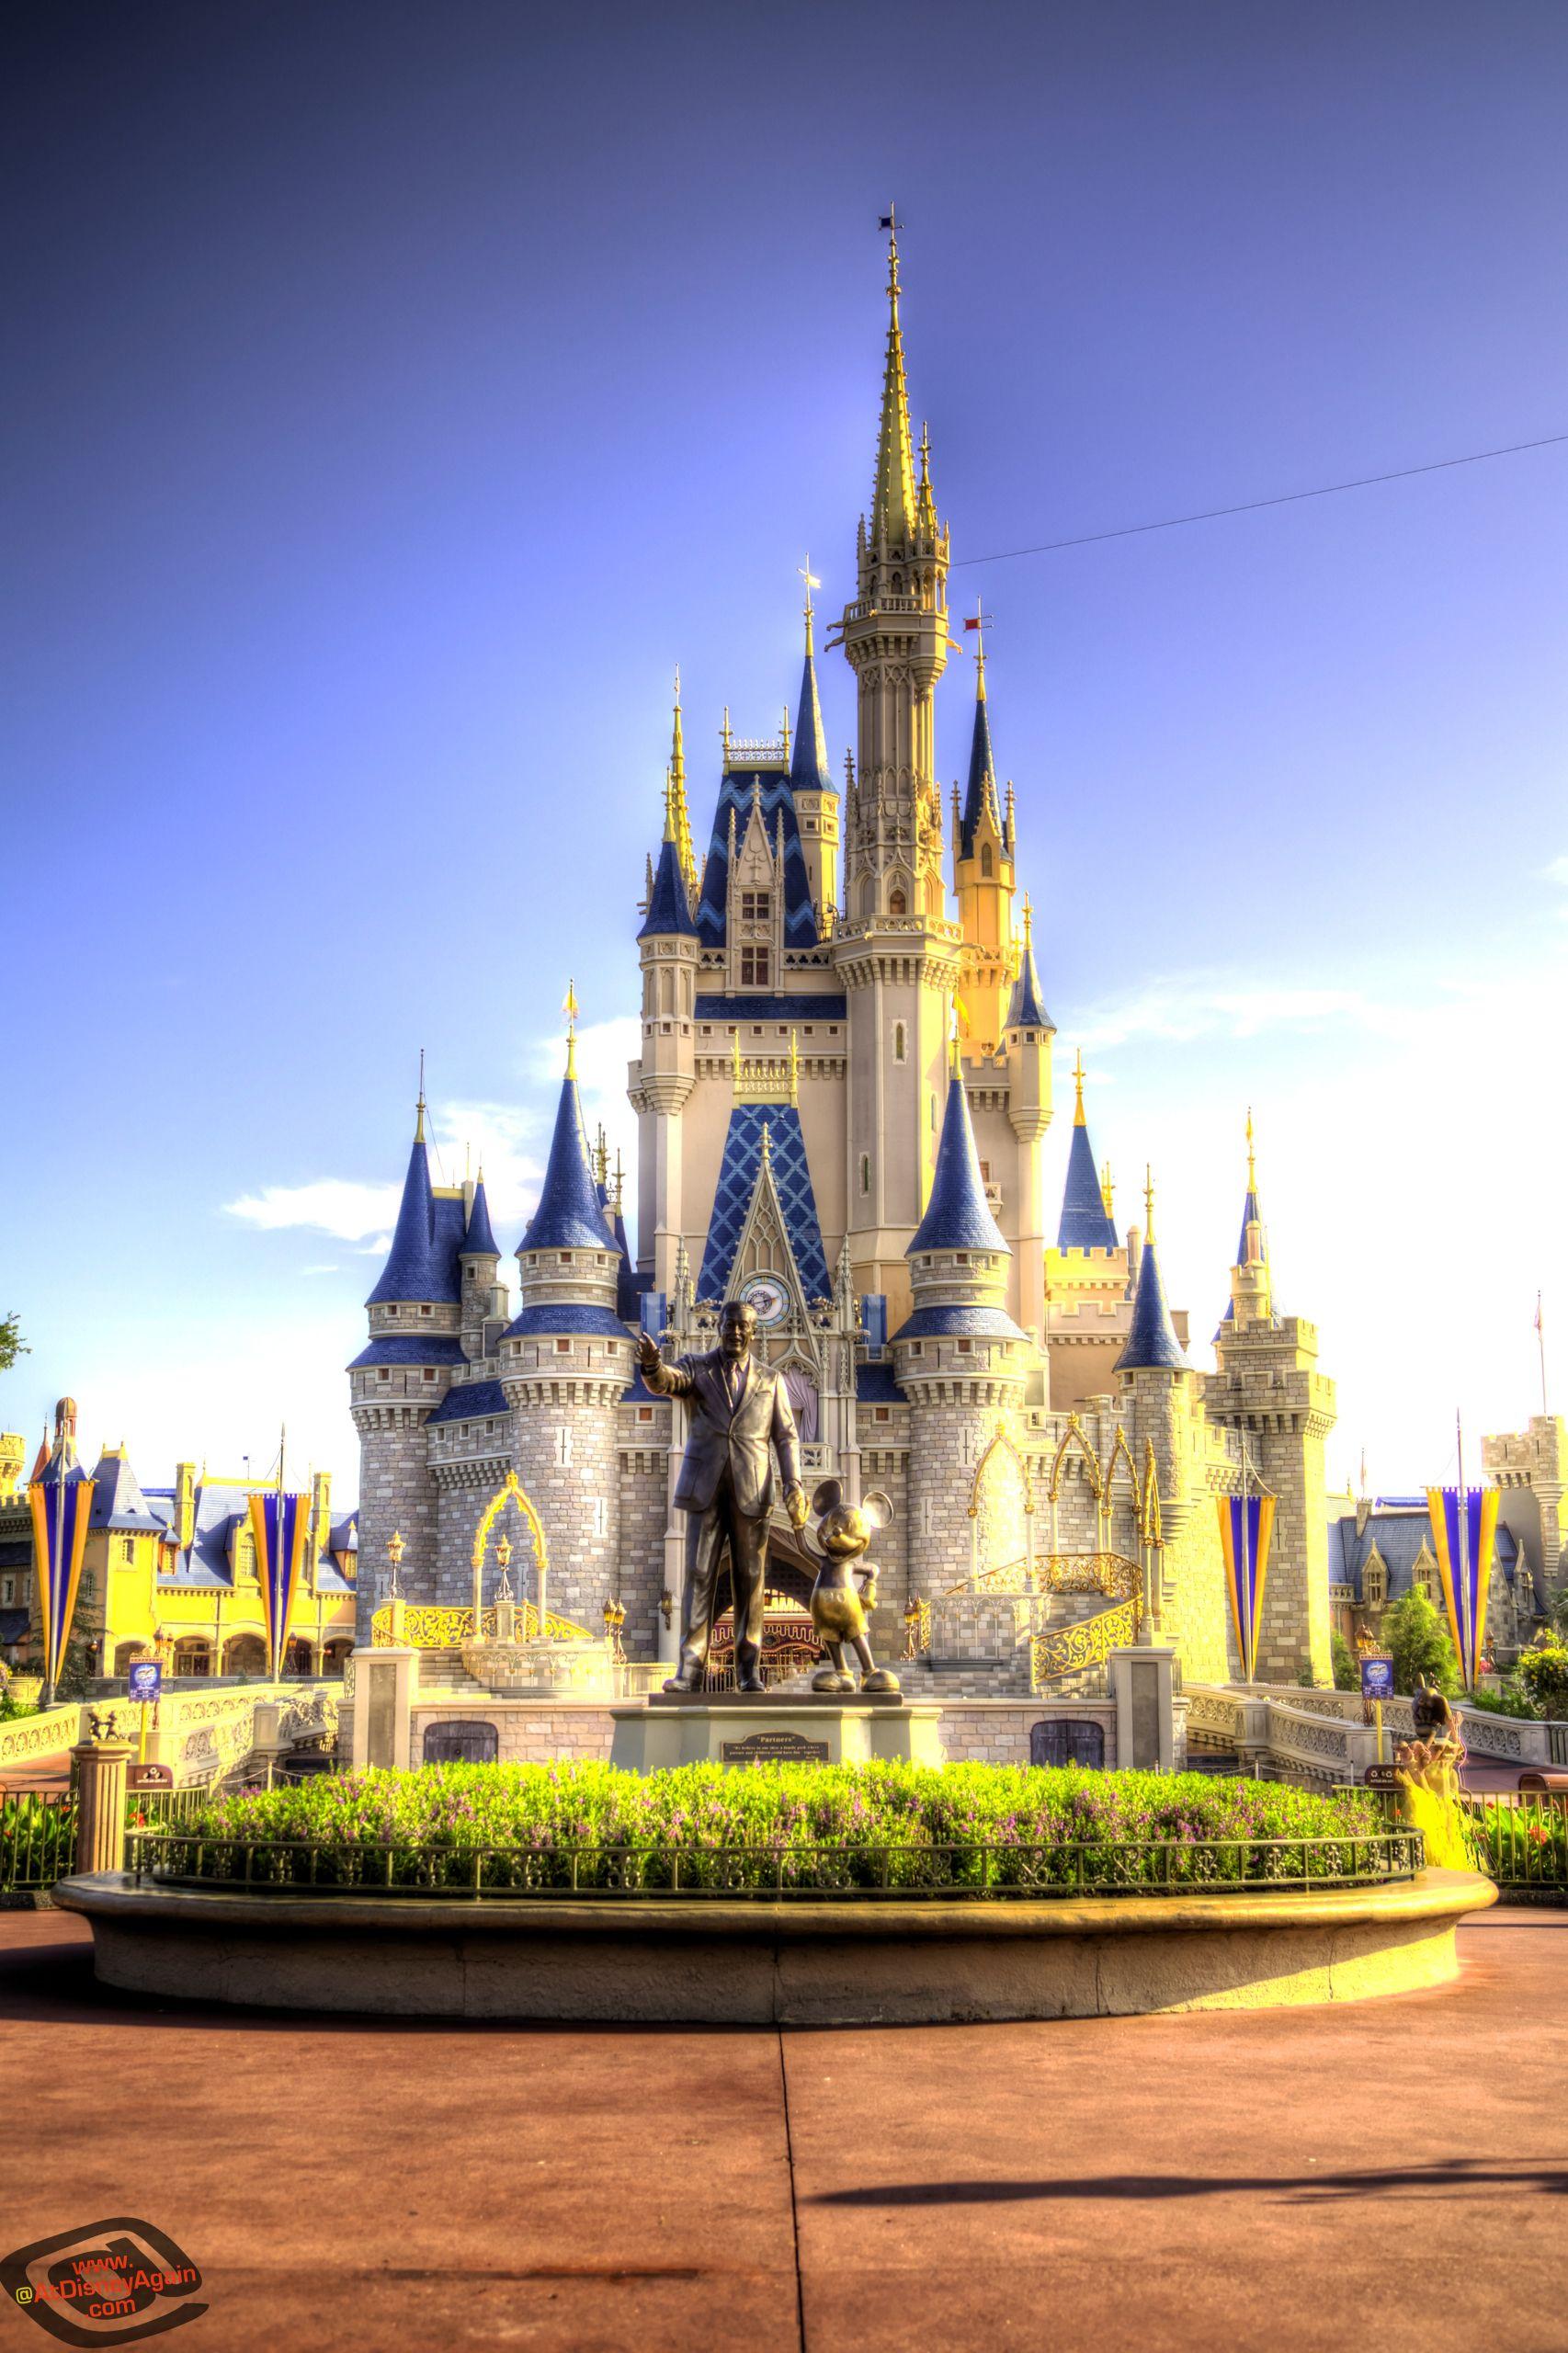 Cinderella Castle Wallpaper 4K, Walt Disney World